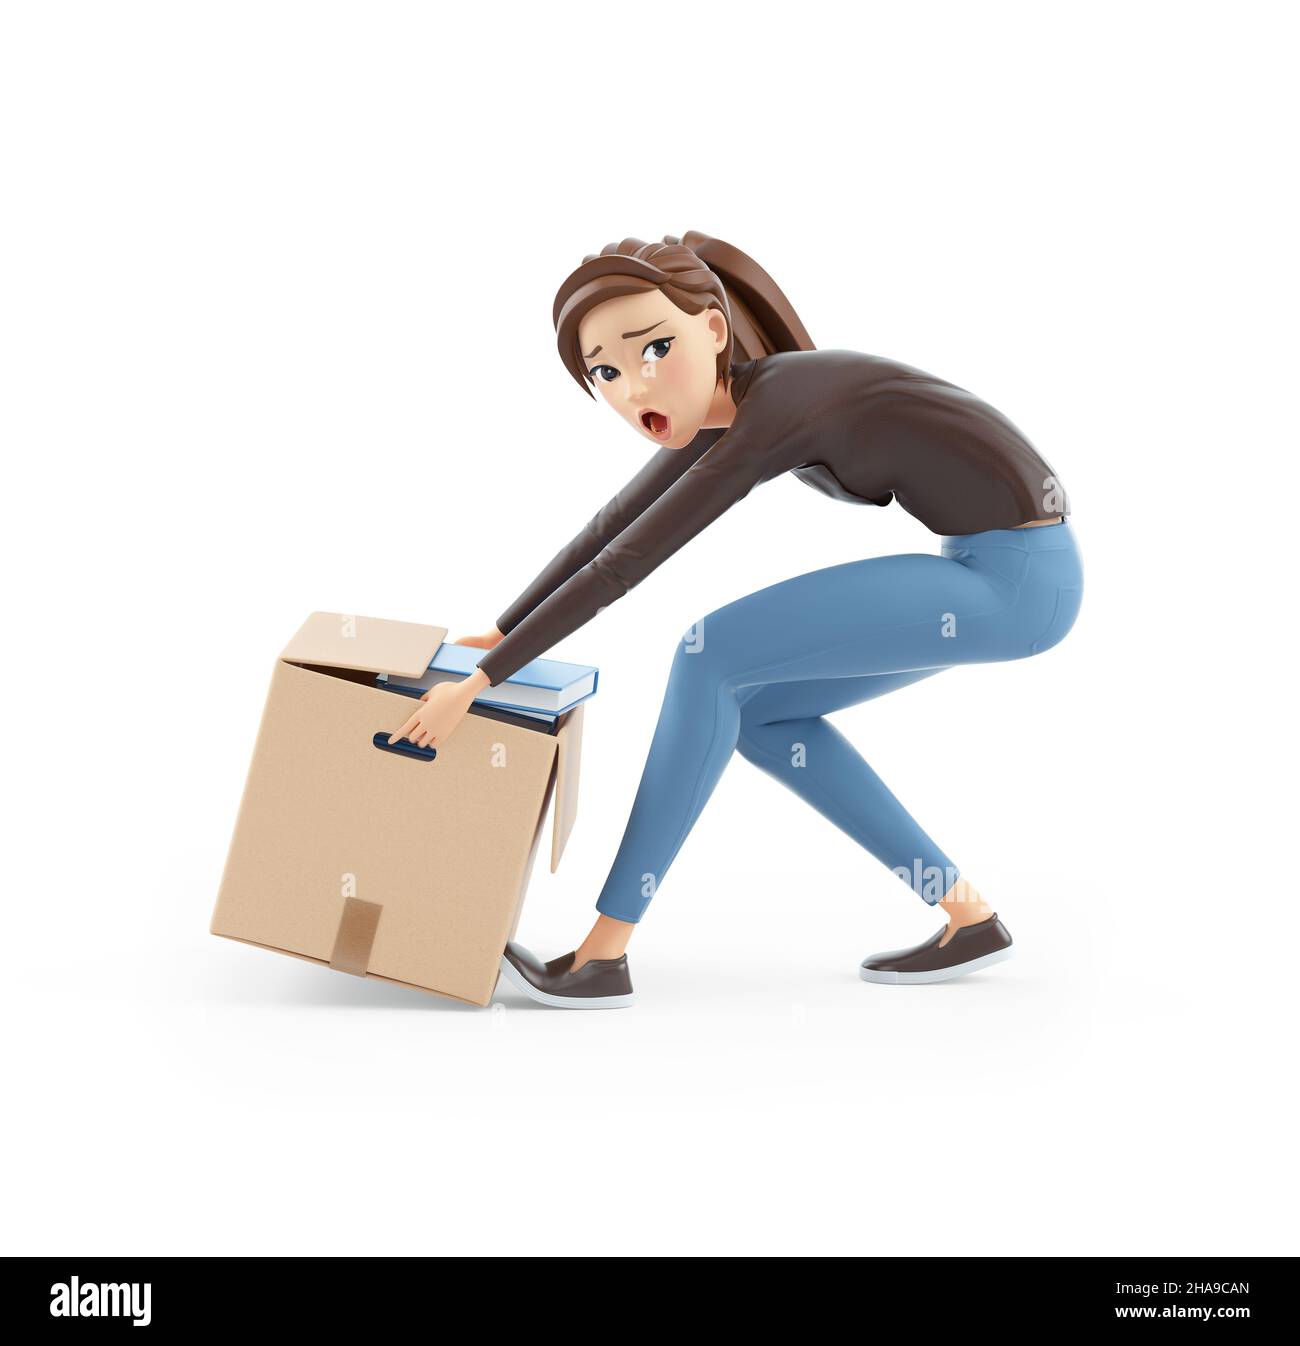 3d cartoon woman lifting heavy box, illustration isolated on white background Stock Photo